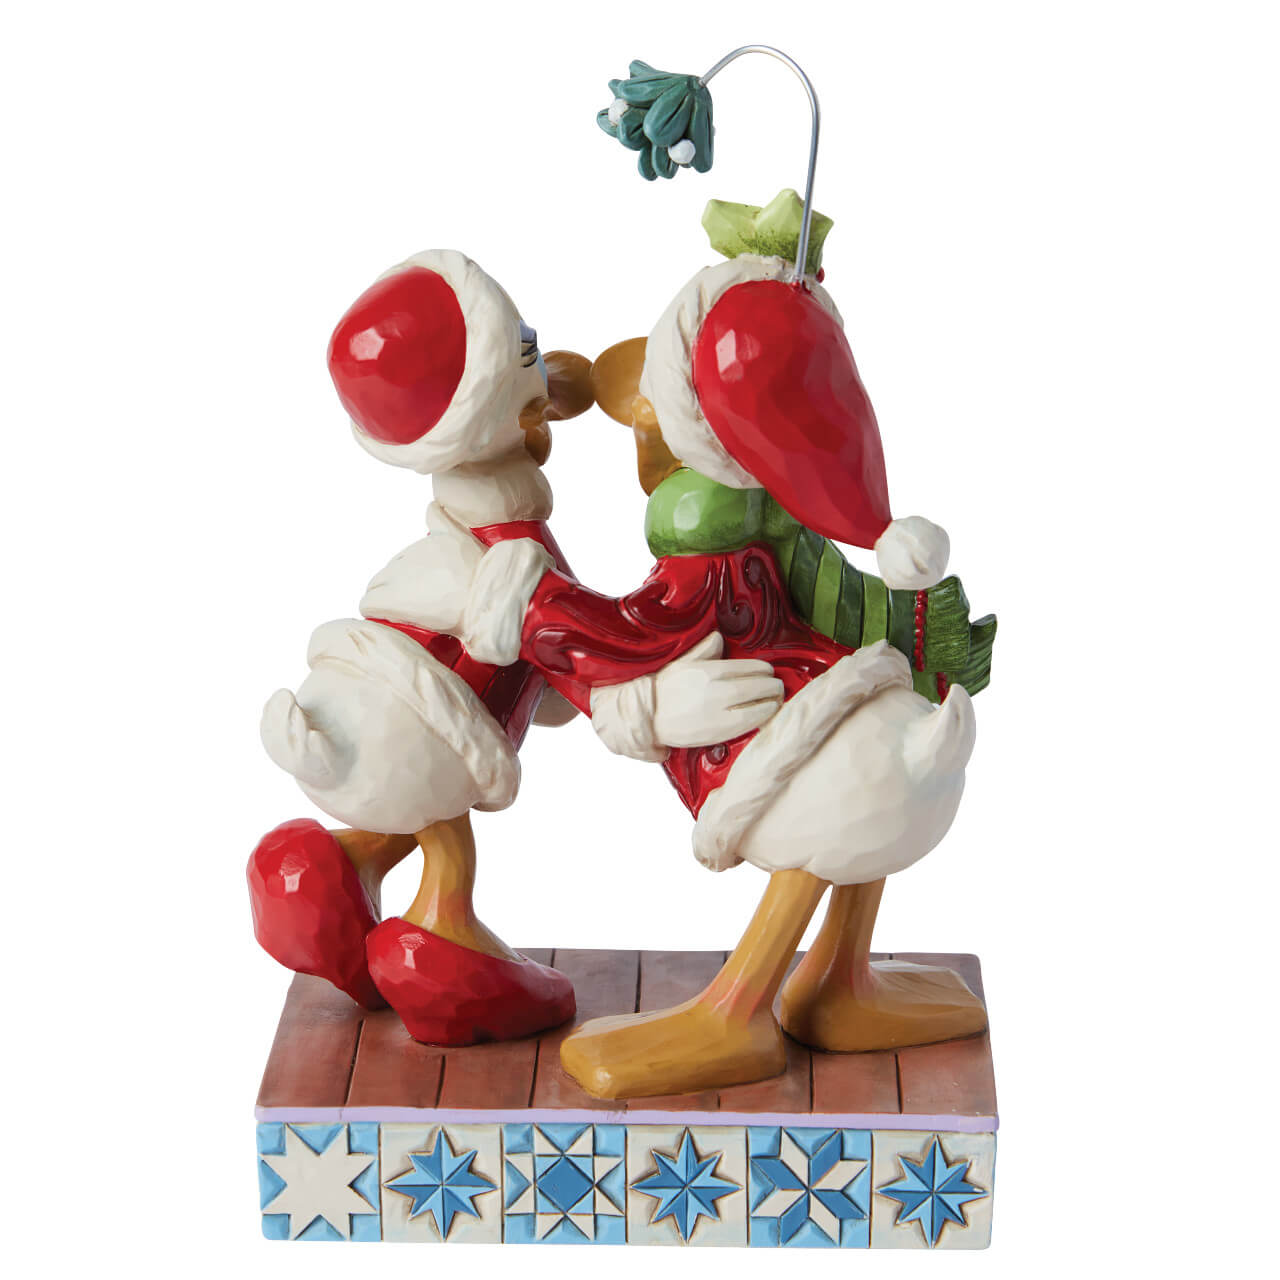 Donald Duck and Daisy Duck unter dem Mistelzweig Merry Mistletoe (DISNEY TRADITIONS) Weihnachtsfigur